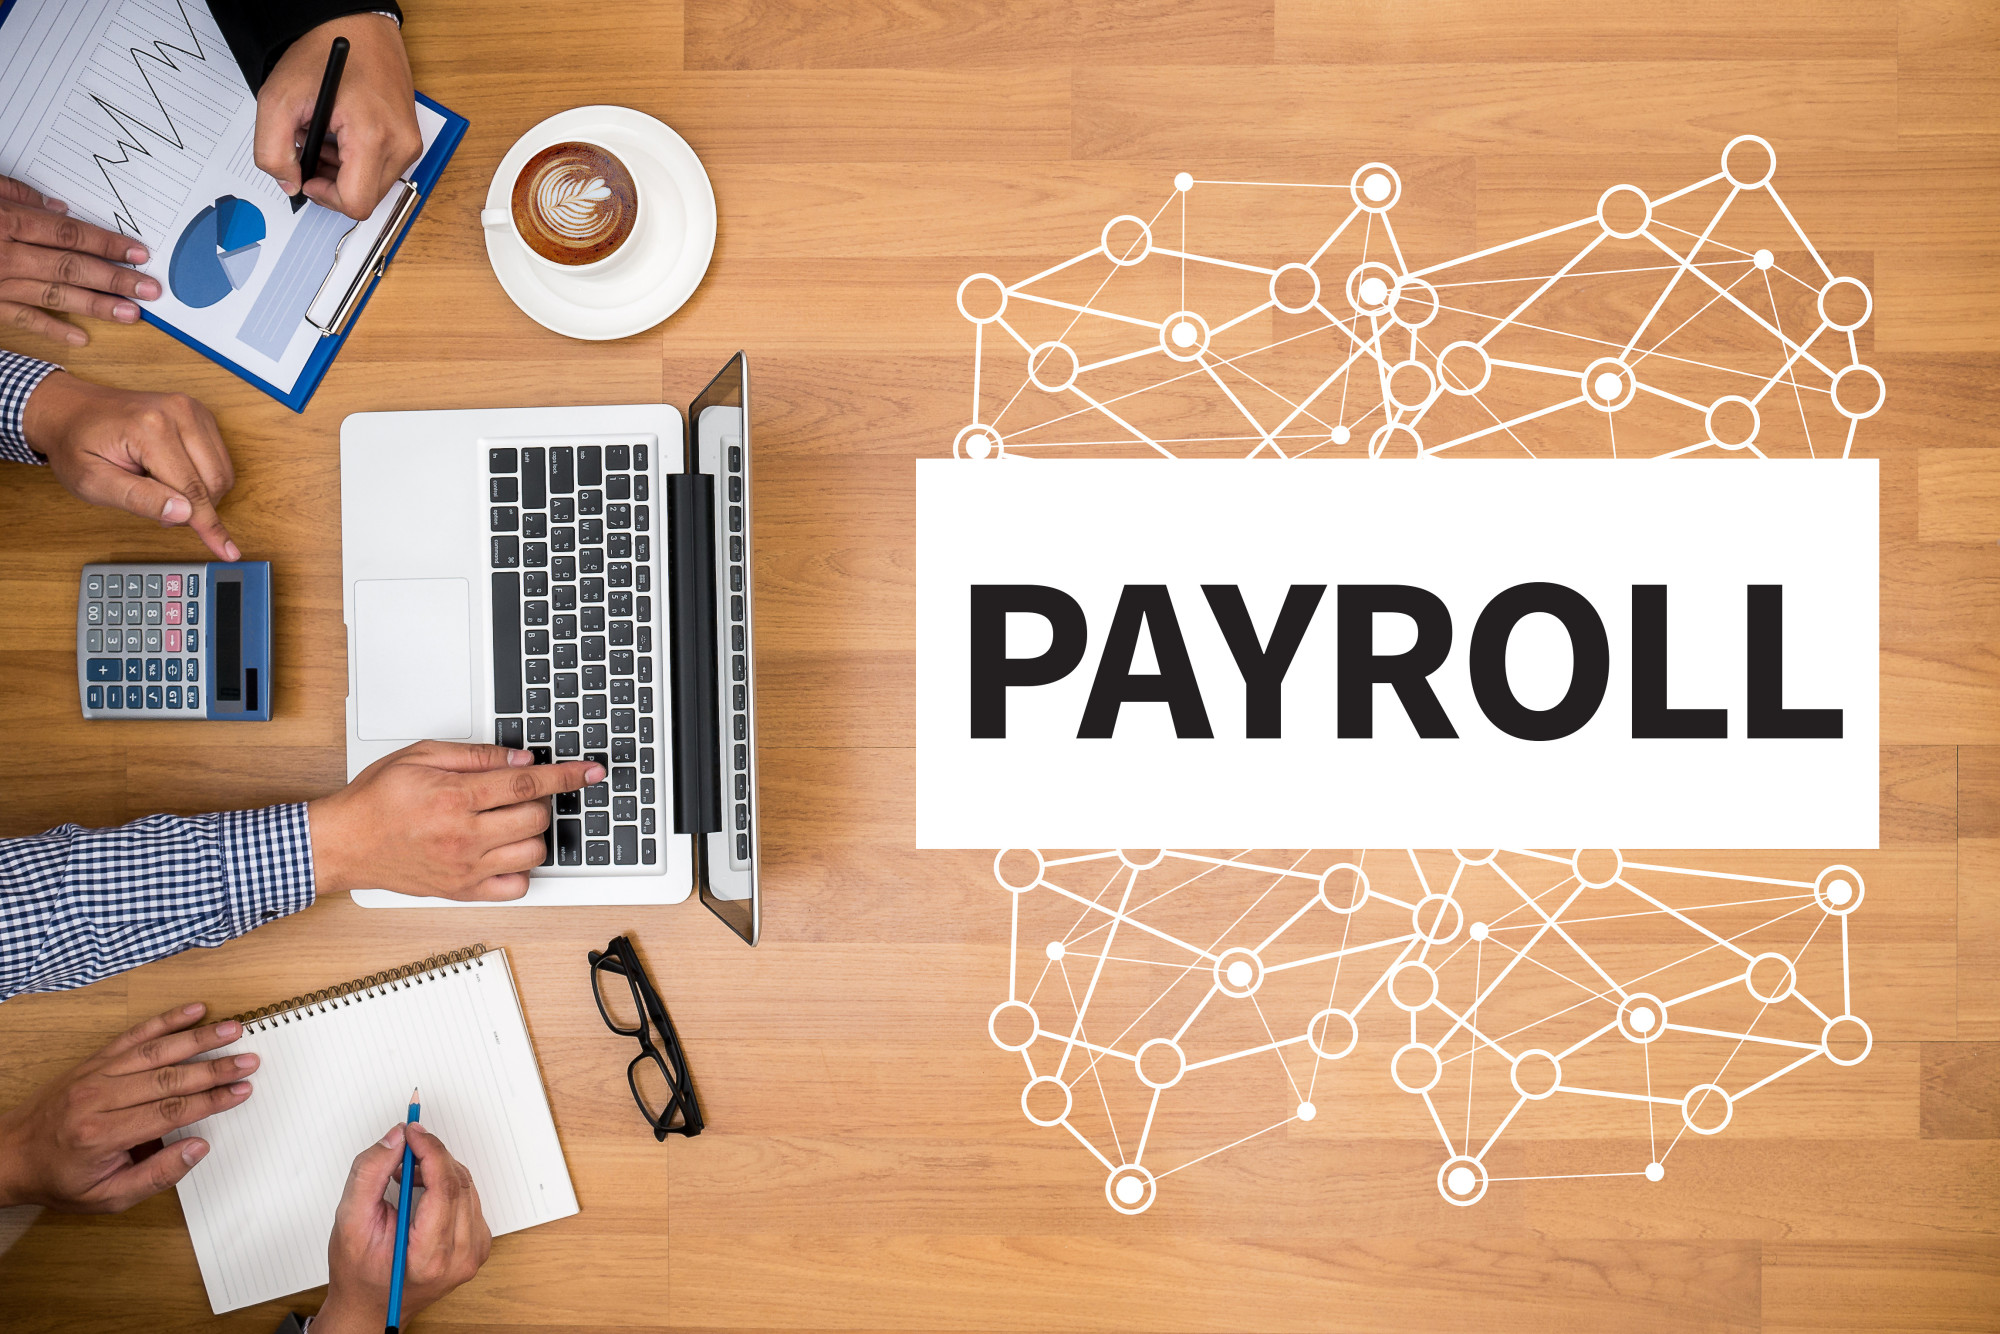 payroll services calgary